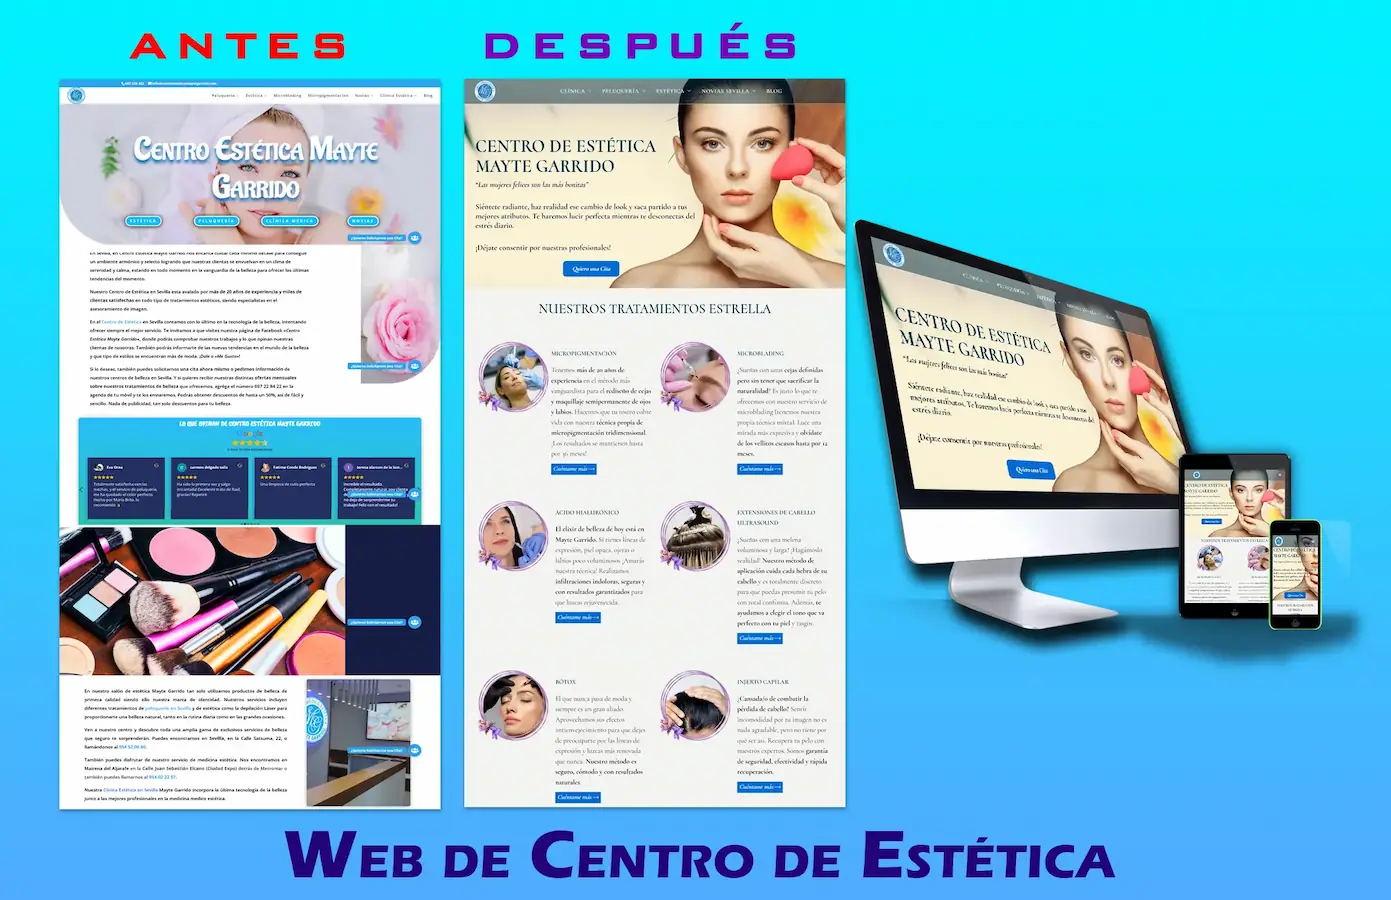 Web de Centro de Estética